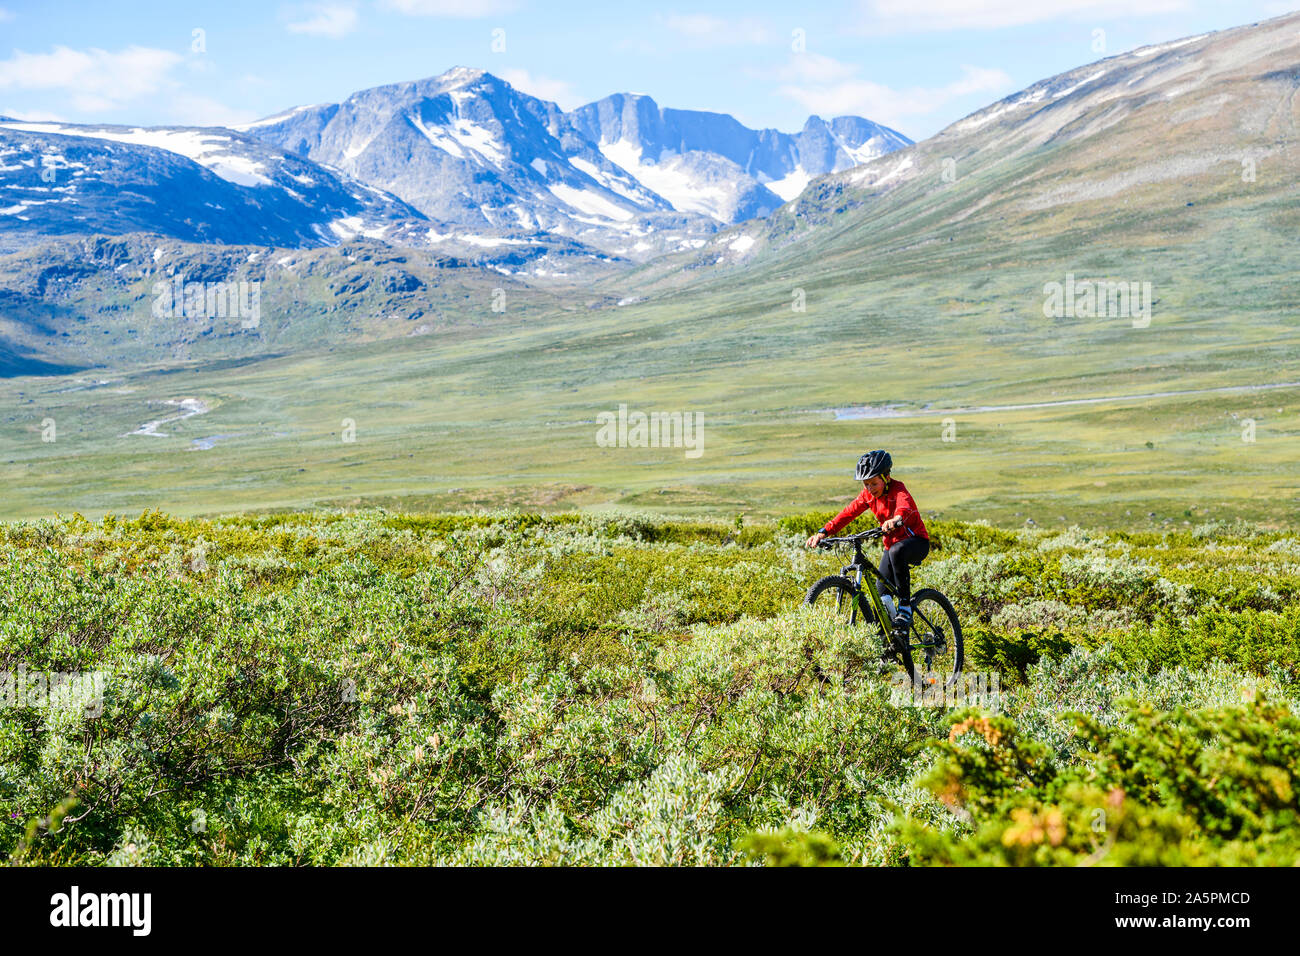 Boy riding bike in mountains Stock Photo